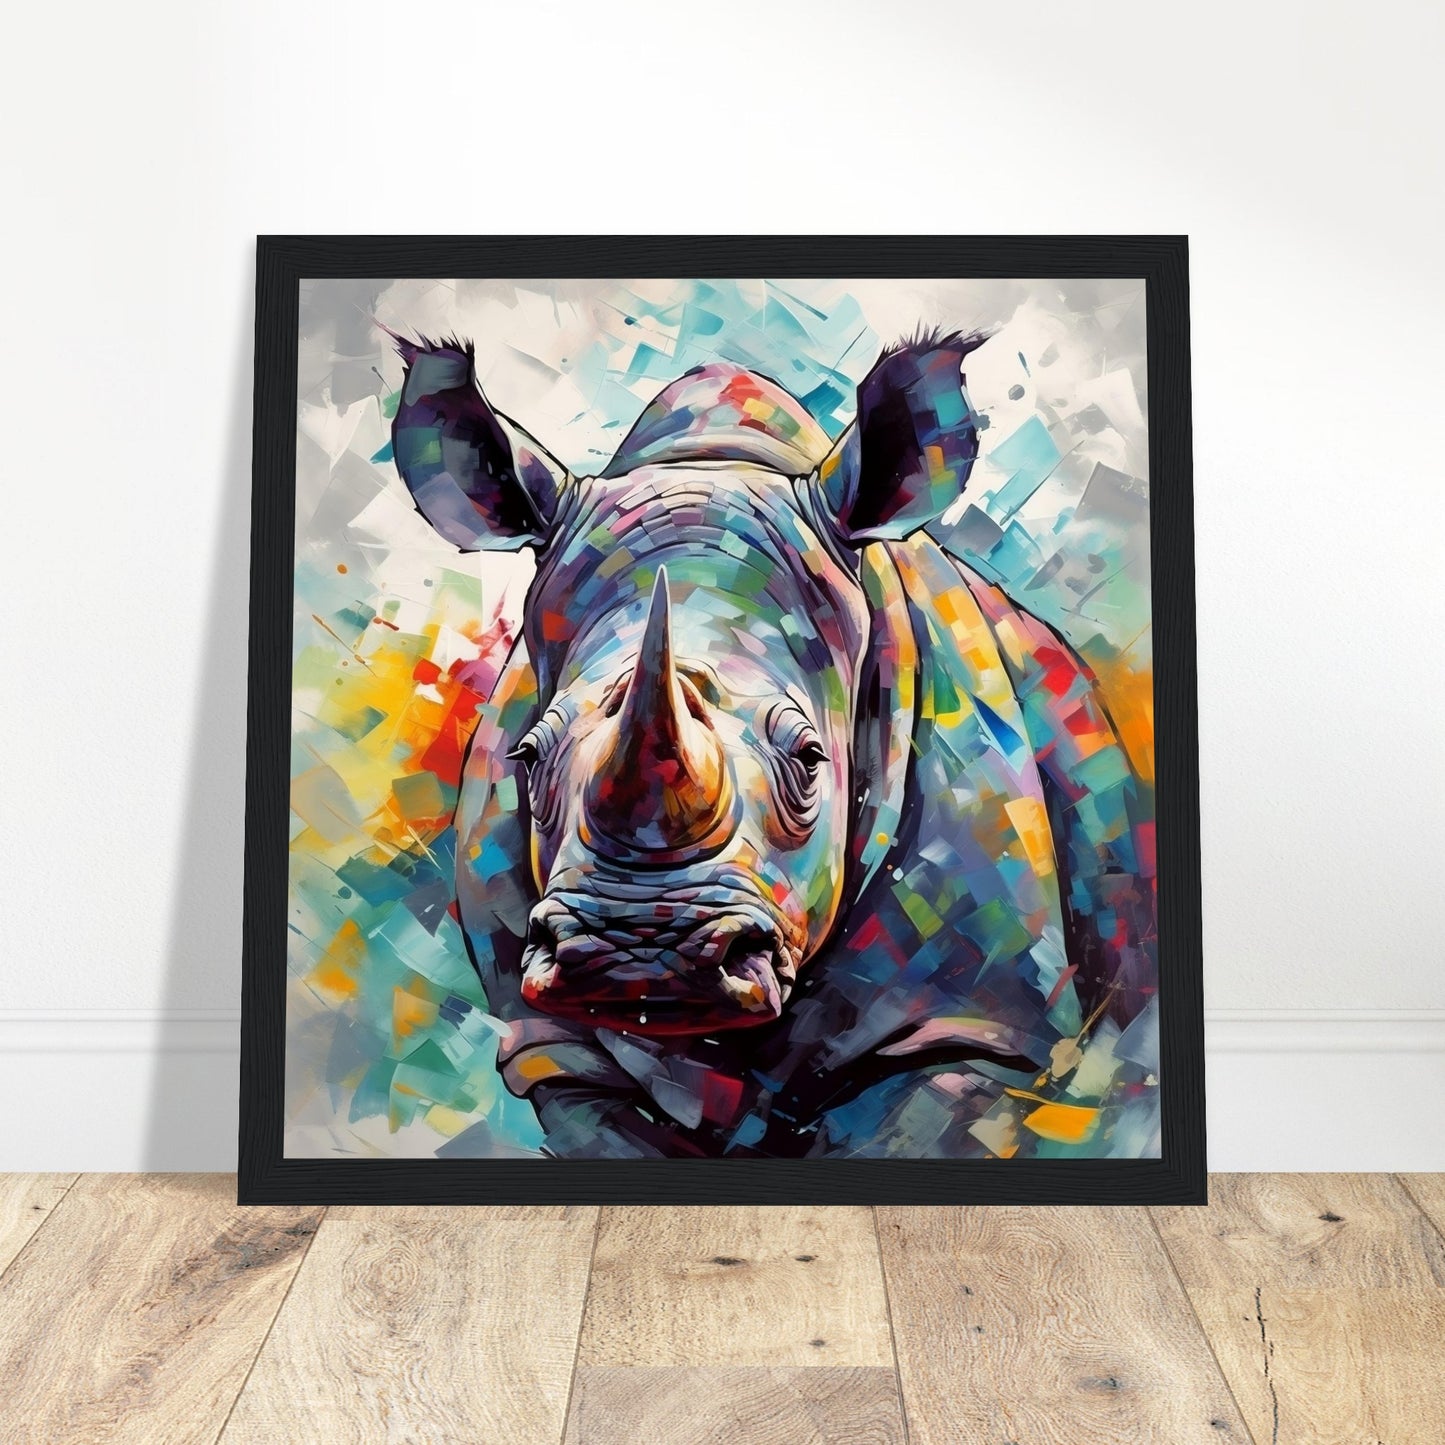 Radiant Rhino Artwork #2 - Print Room Ltd Wood frame 70x70 cm / 28x28"